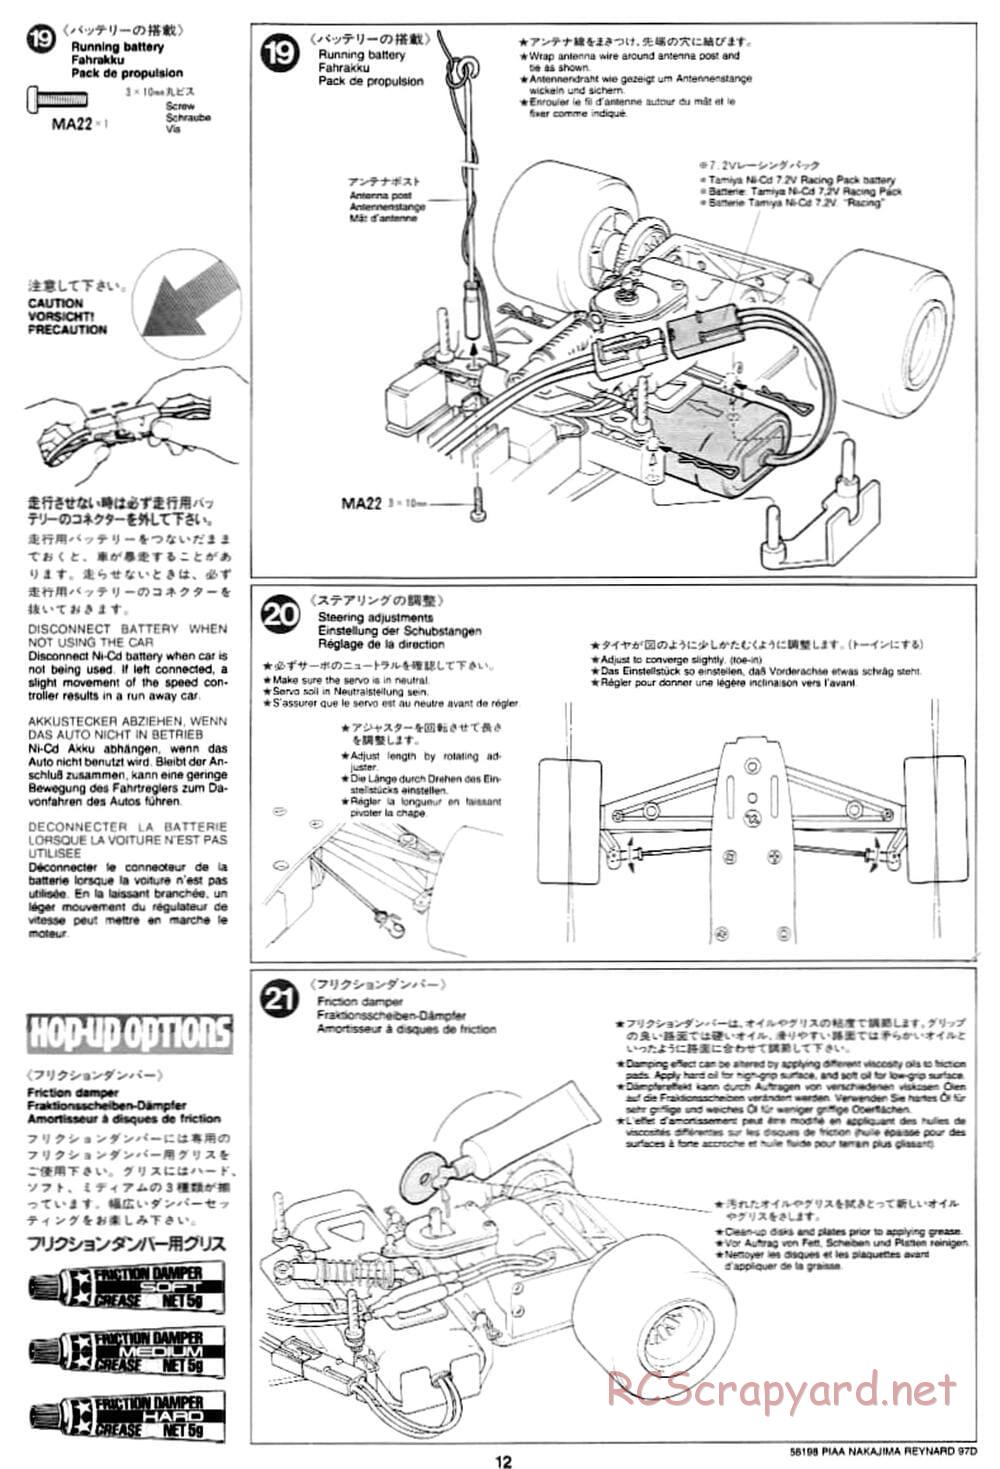 Tamiya - PIAA Nakajima Reynard 97D - F103 Chassis - Manual - Page 12